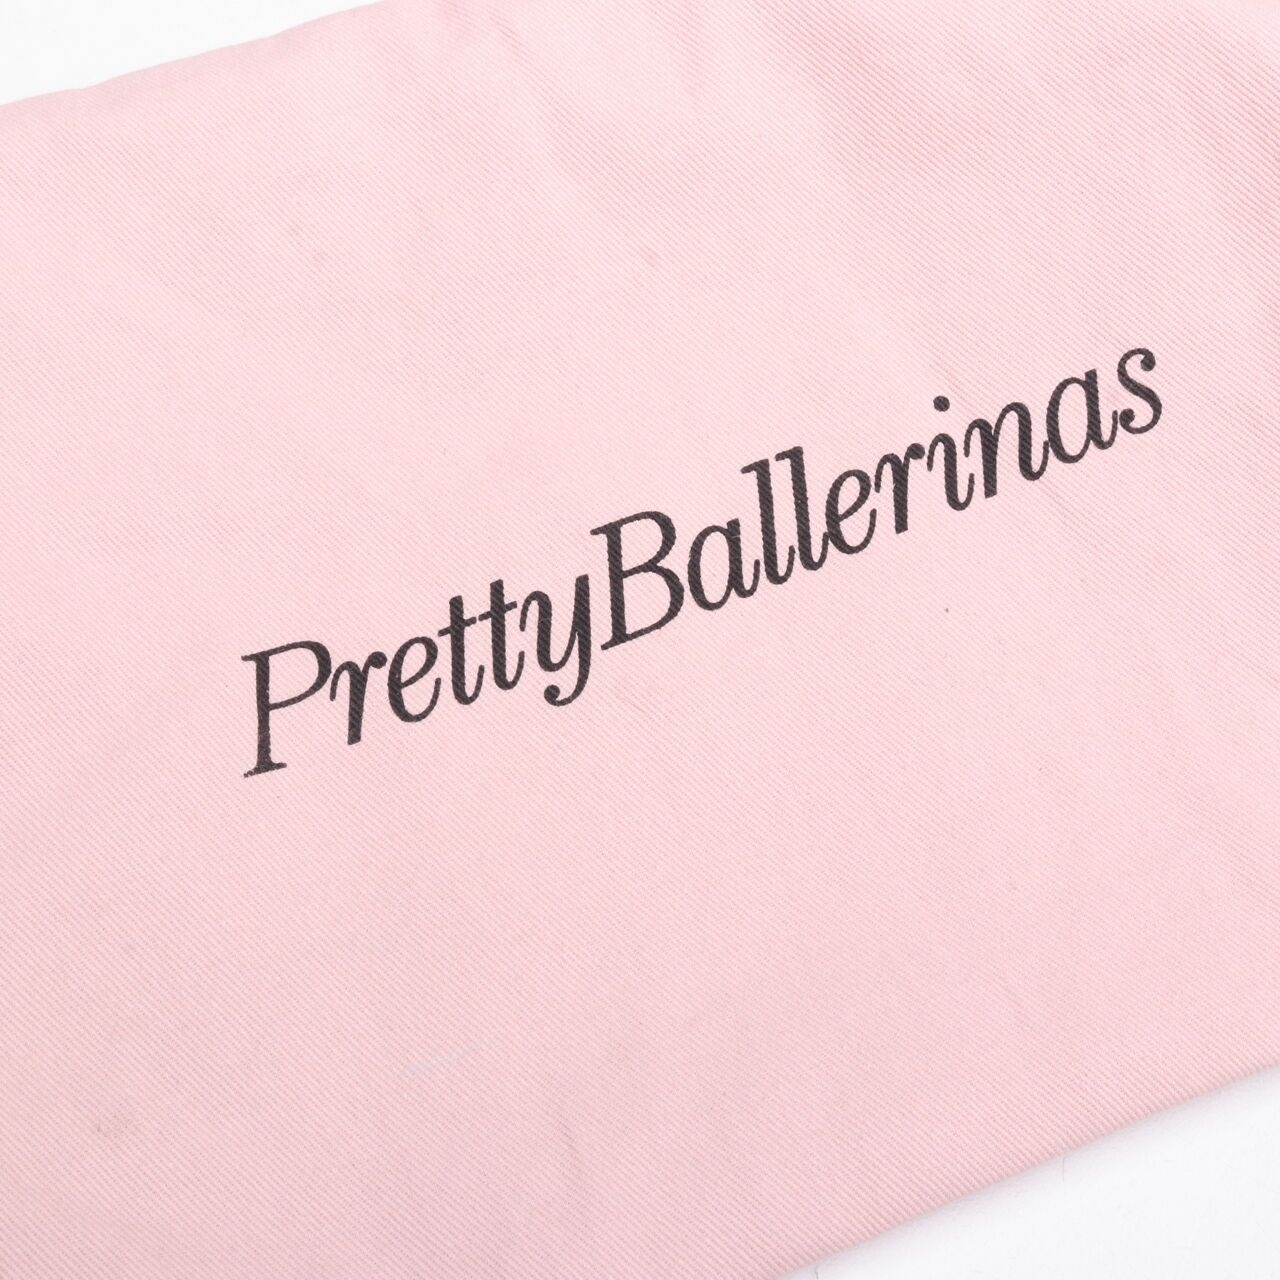 Pretty Ballerinas Black & Pink Flats